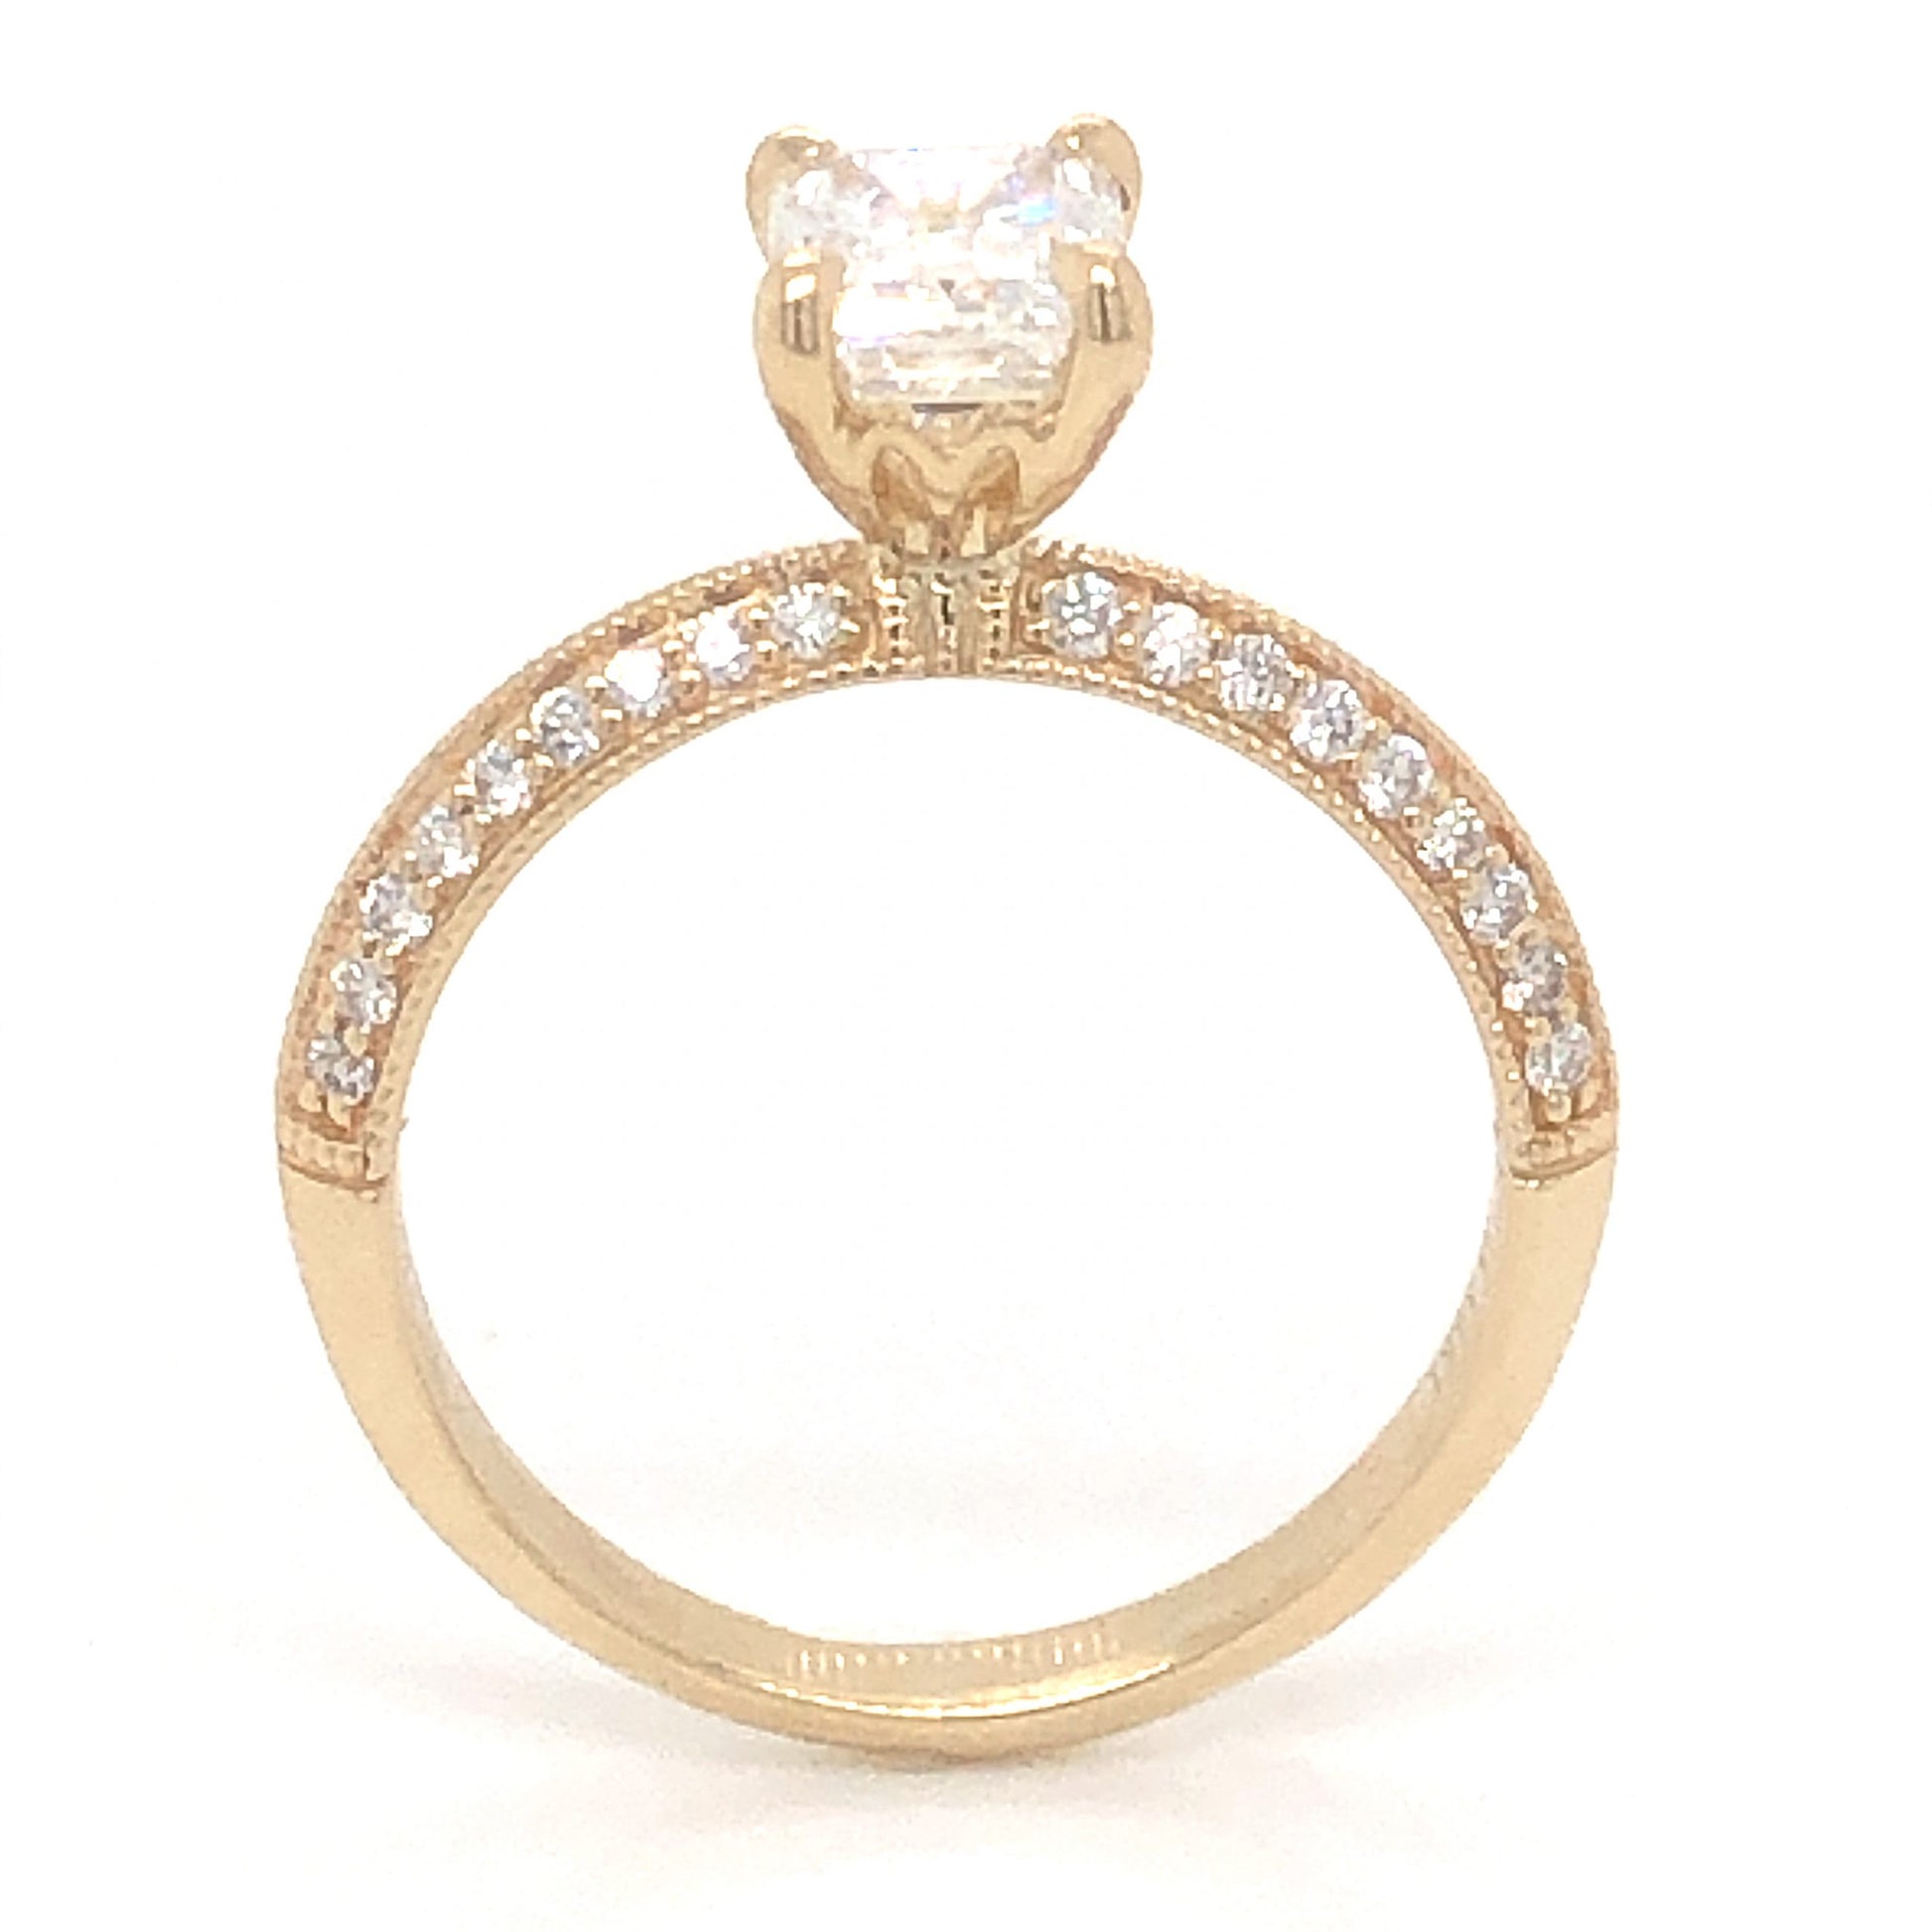 1.20 Emerald Cut Diamond Engagement Ring in 14k Yellow Gold